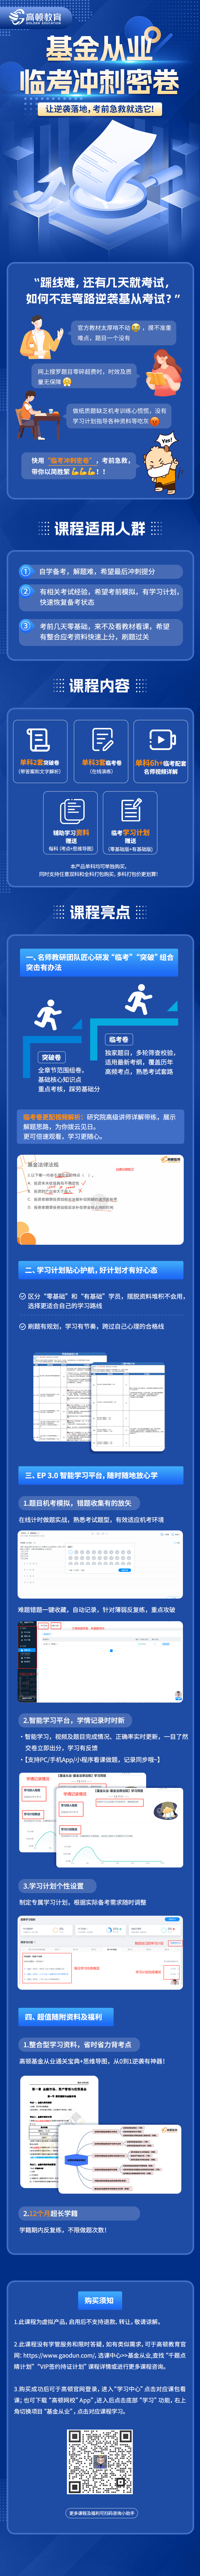 https://simg01.gaodunwangxiao.com/uploadfiles/product-center/202310/31/90605_20231031131302.jpg